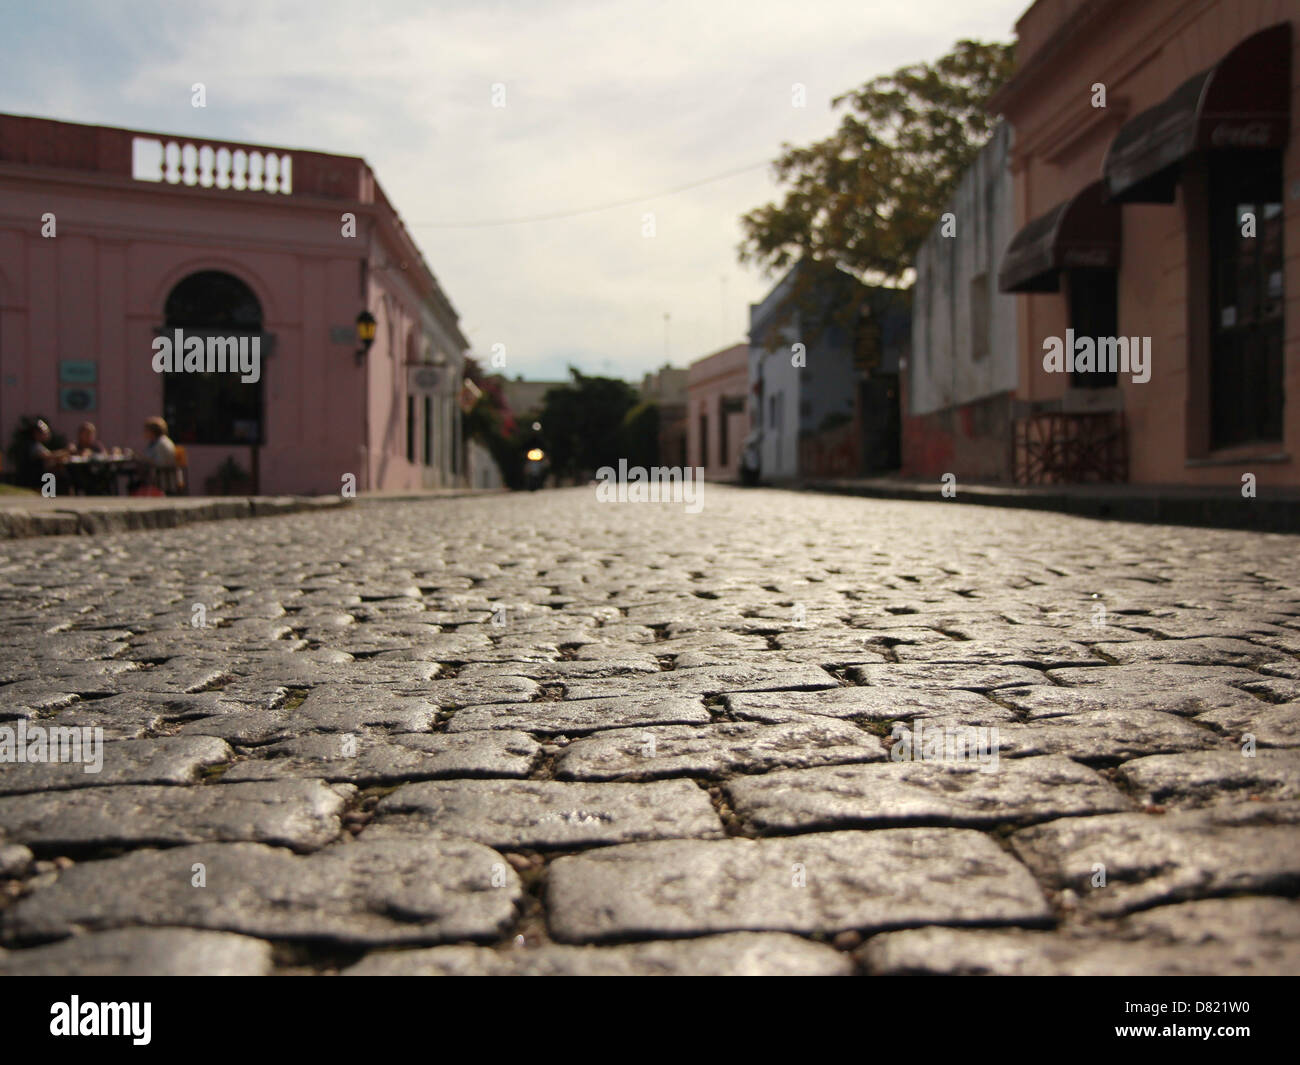 The cobbled stone streets of Colonia de Sacremento, Uruguay. Stock Photo